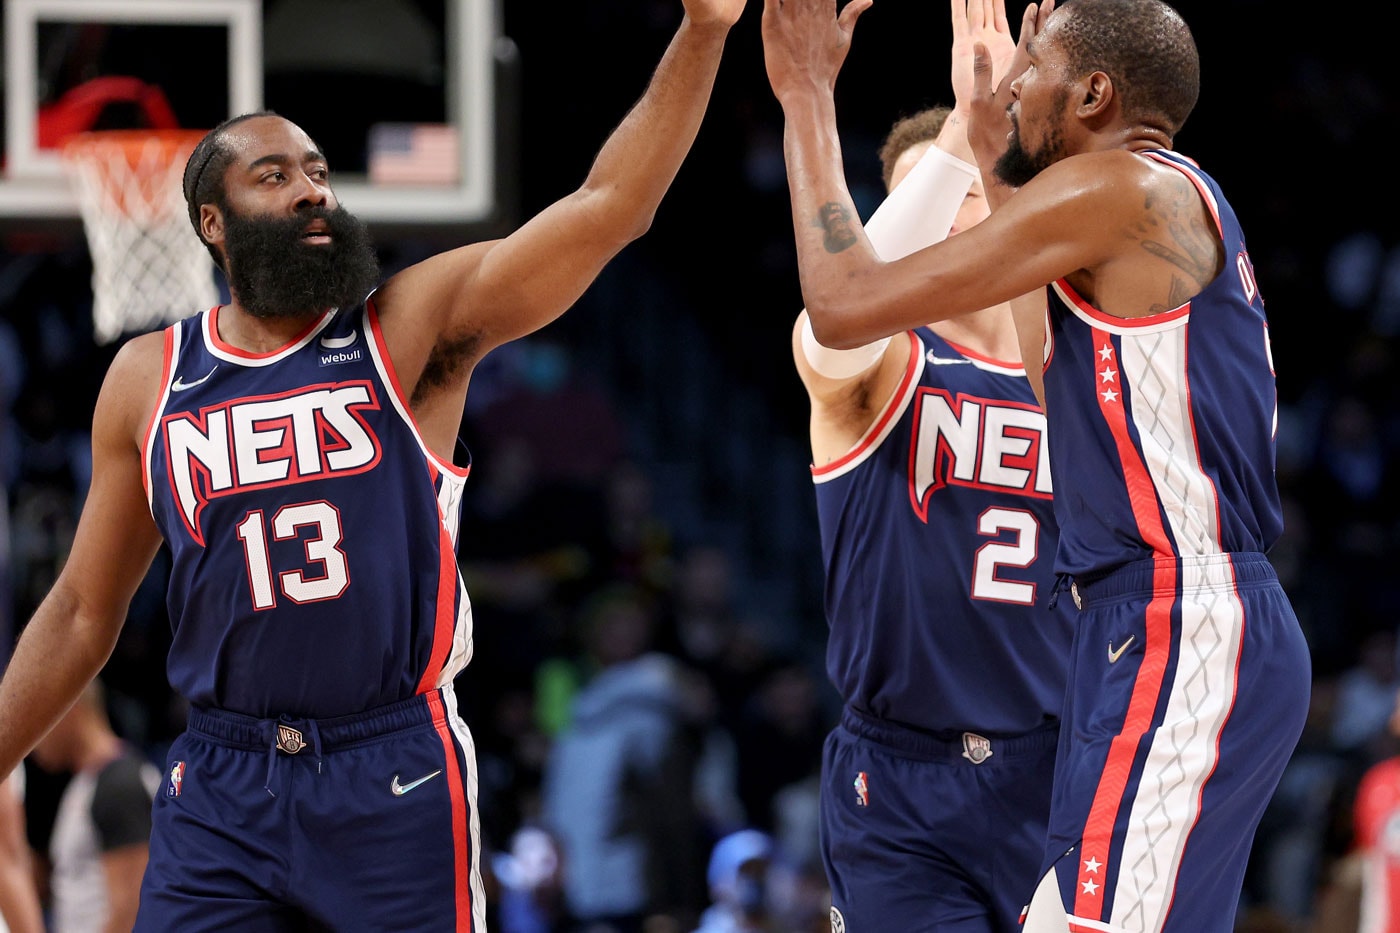 The Brooklyn Nets: The New NBA Superteam?